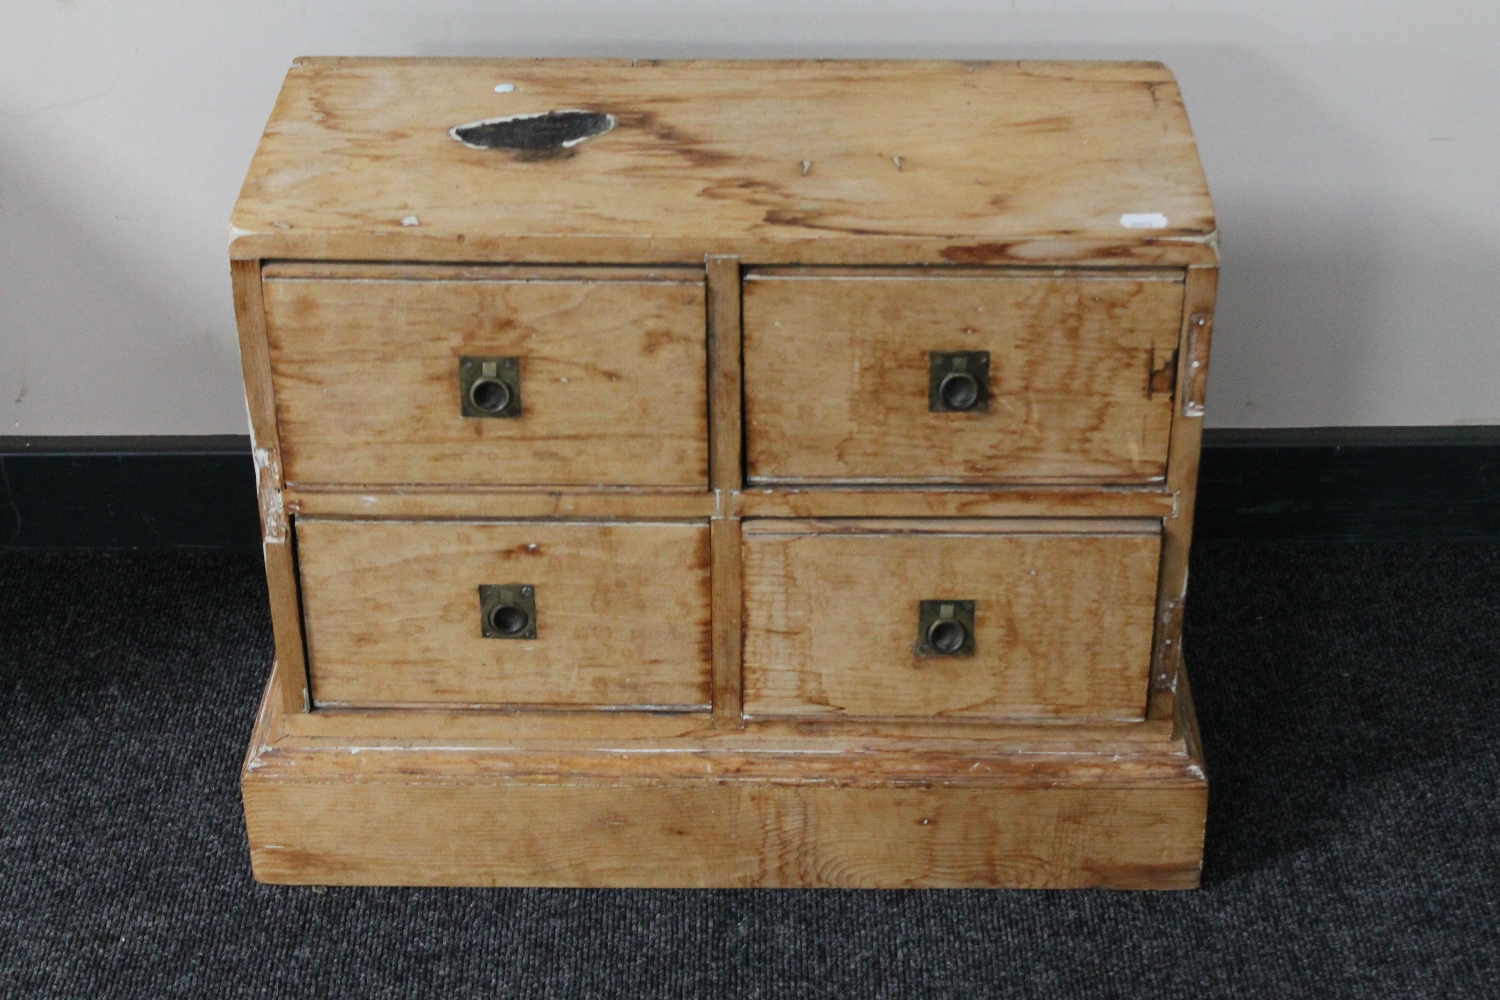 An antique pine miniature four drawer chest